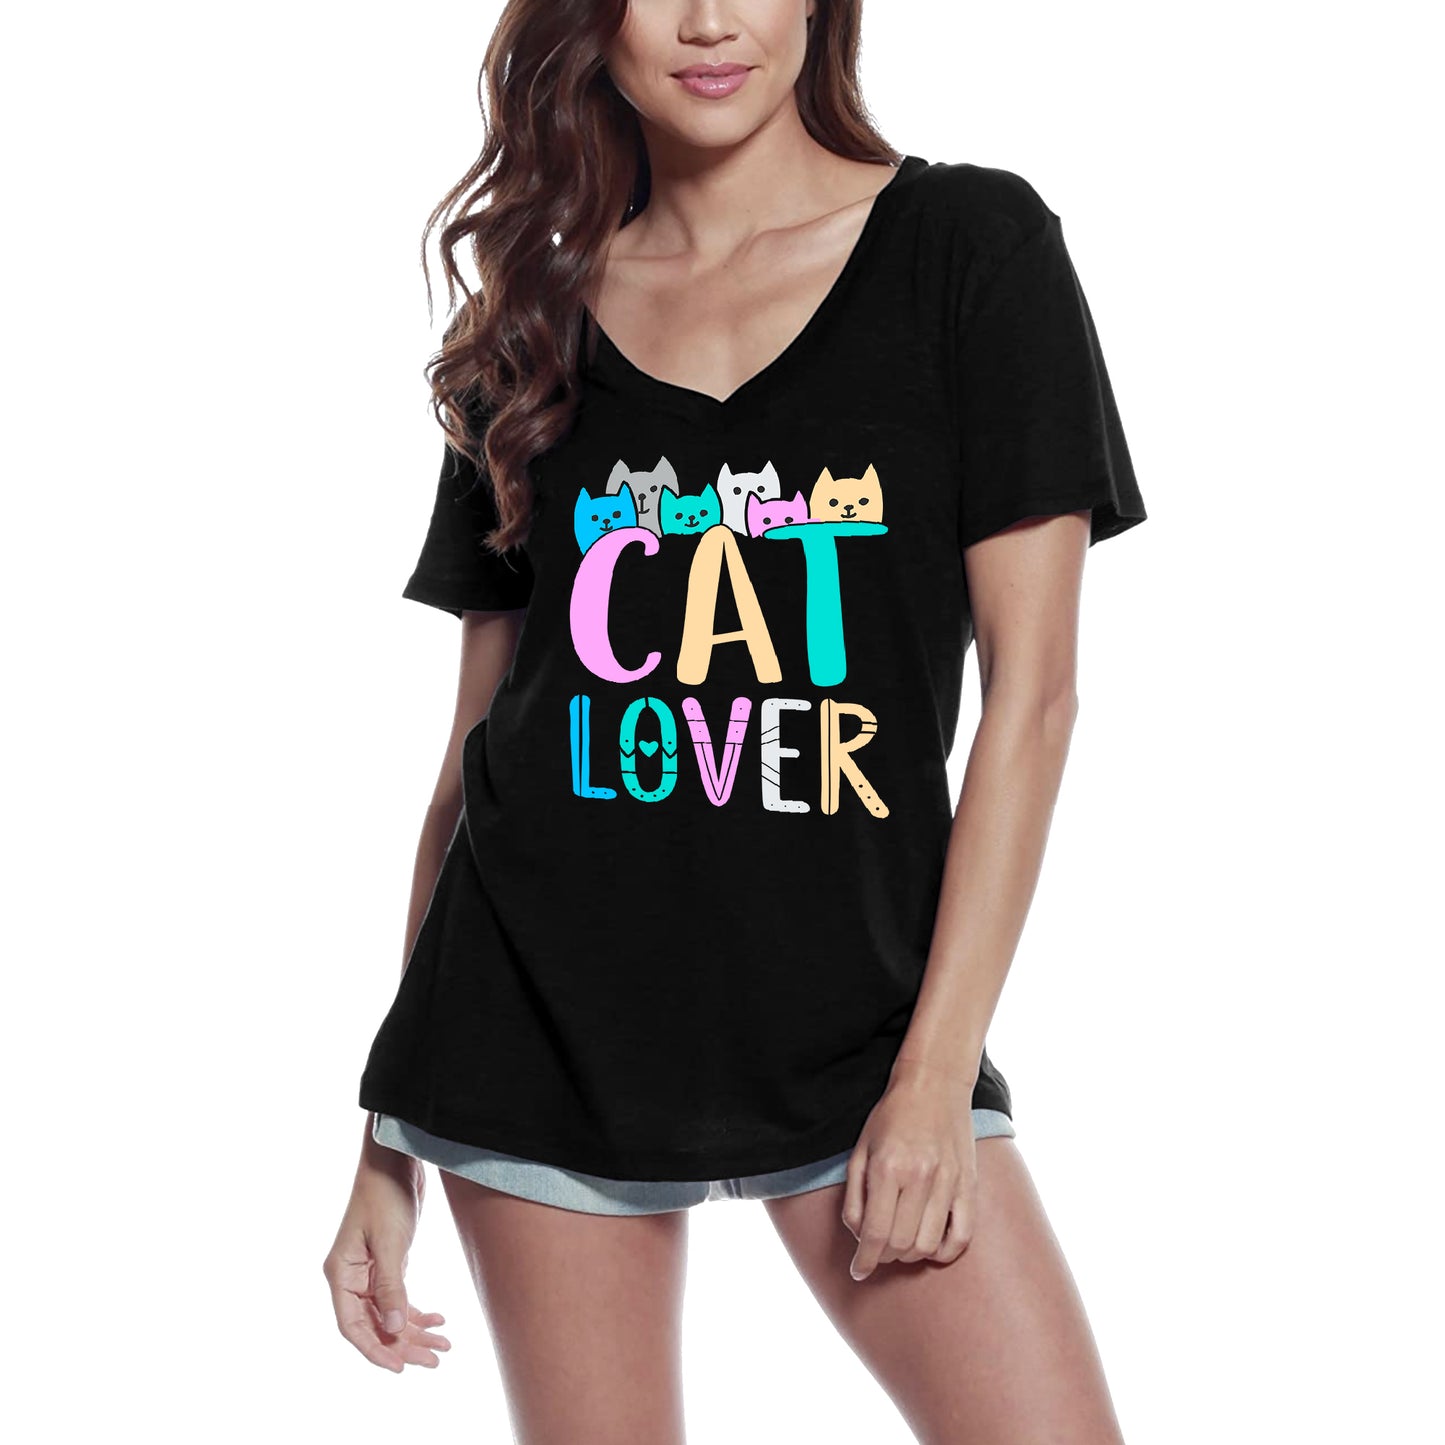 ULTRABASIC Women's T-Shirt Cat Lover - Casual Cute Graphic Tee Shirt